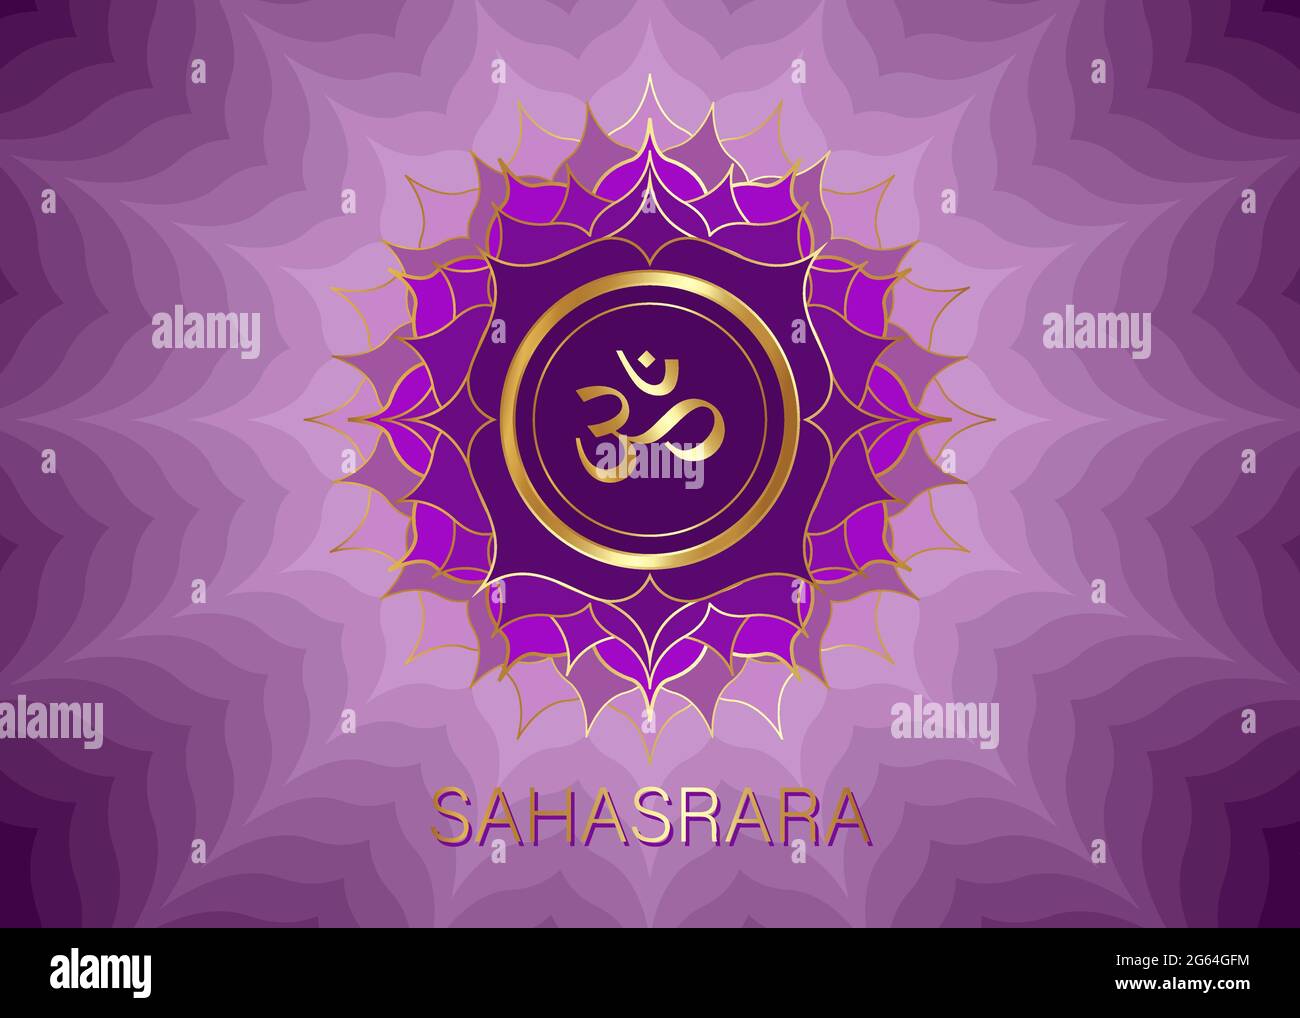 Sahasrara crown chakra design for yoga - Stock Illustration